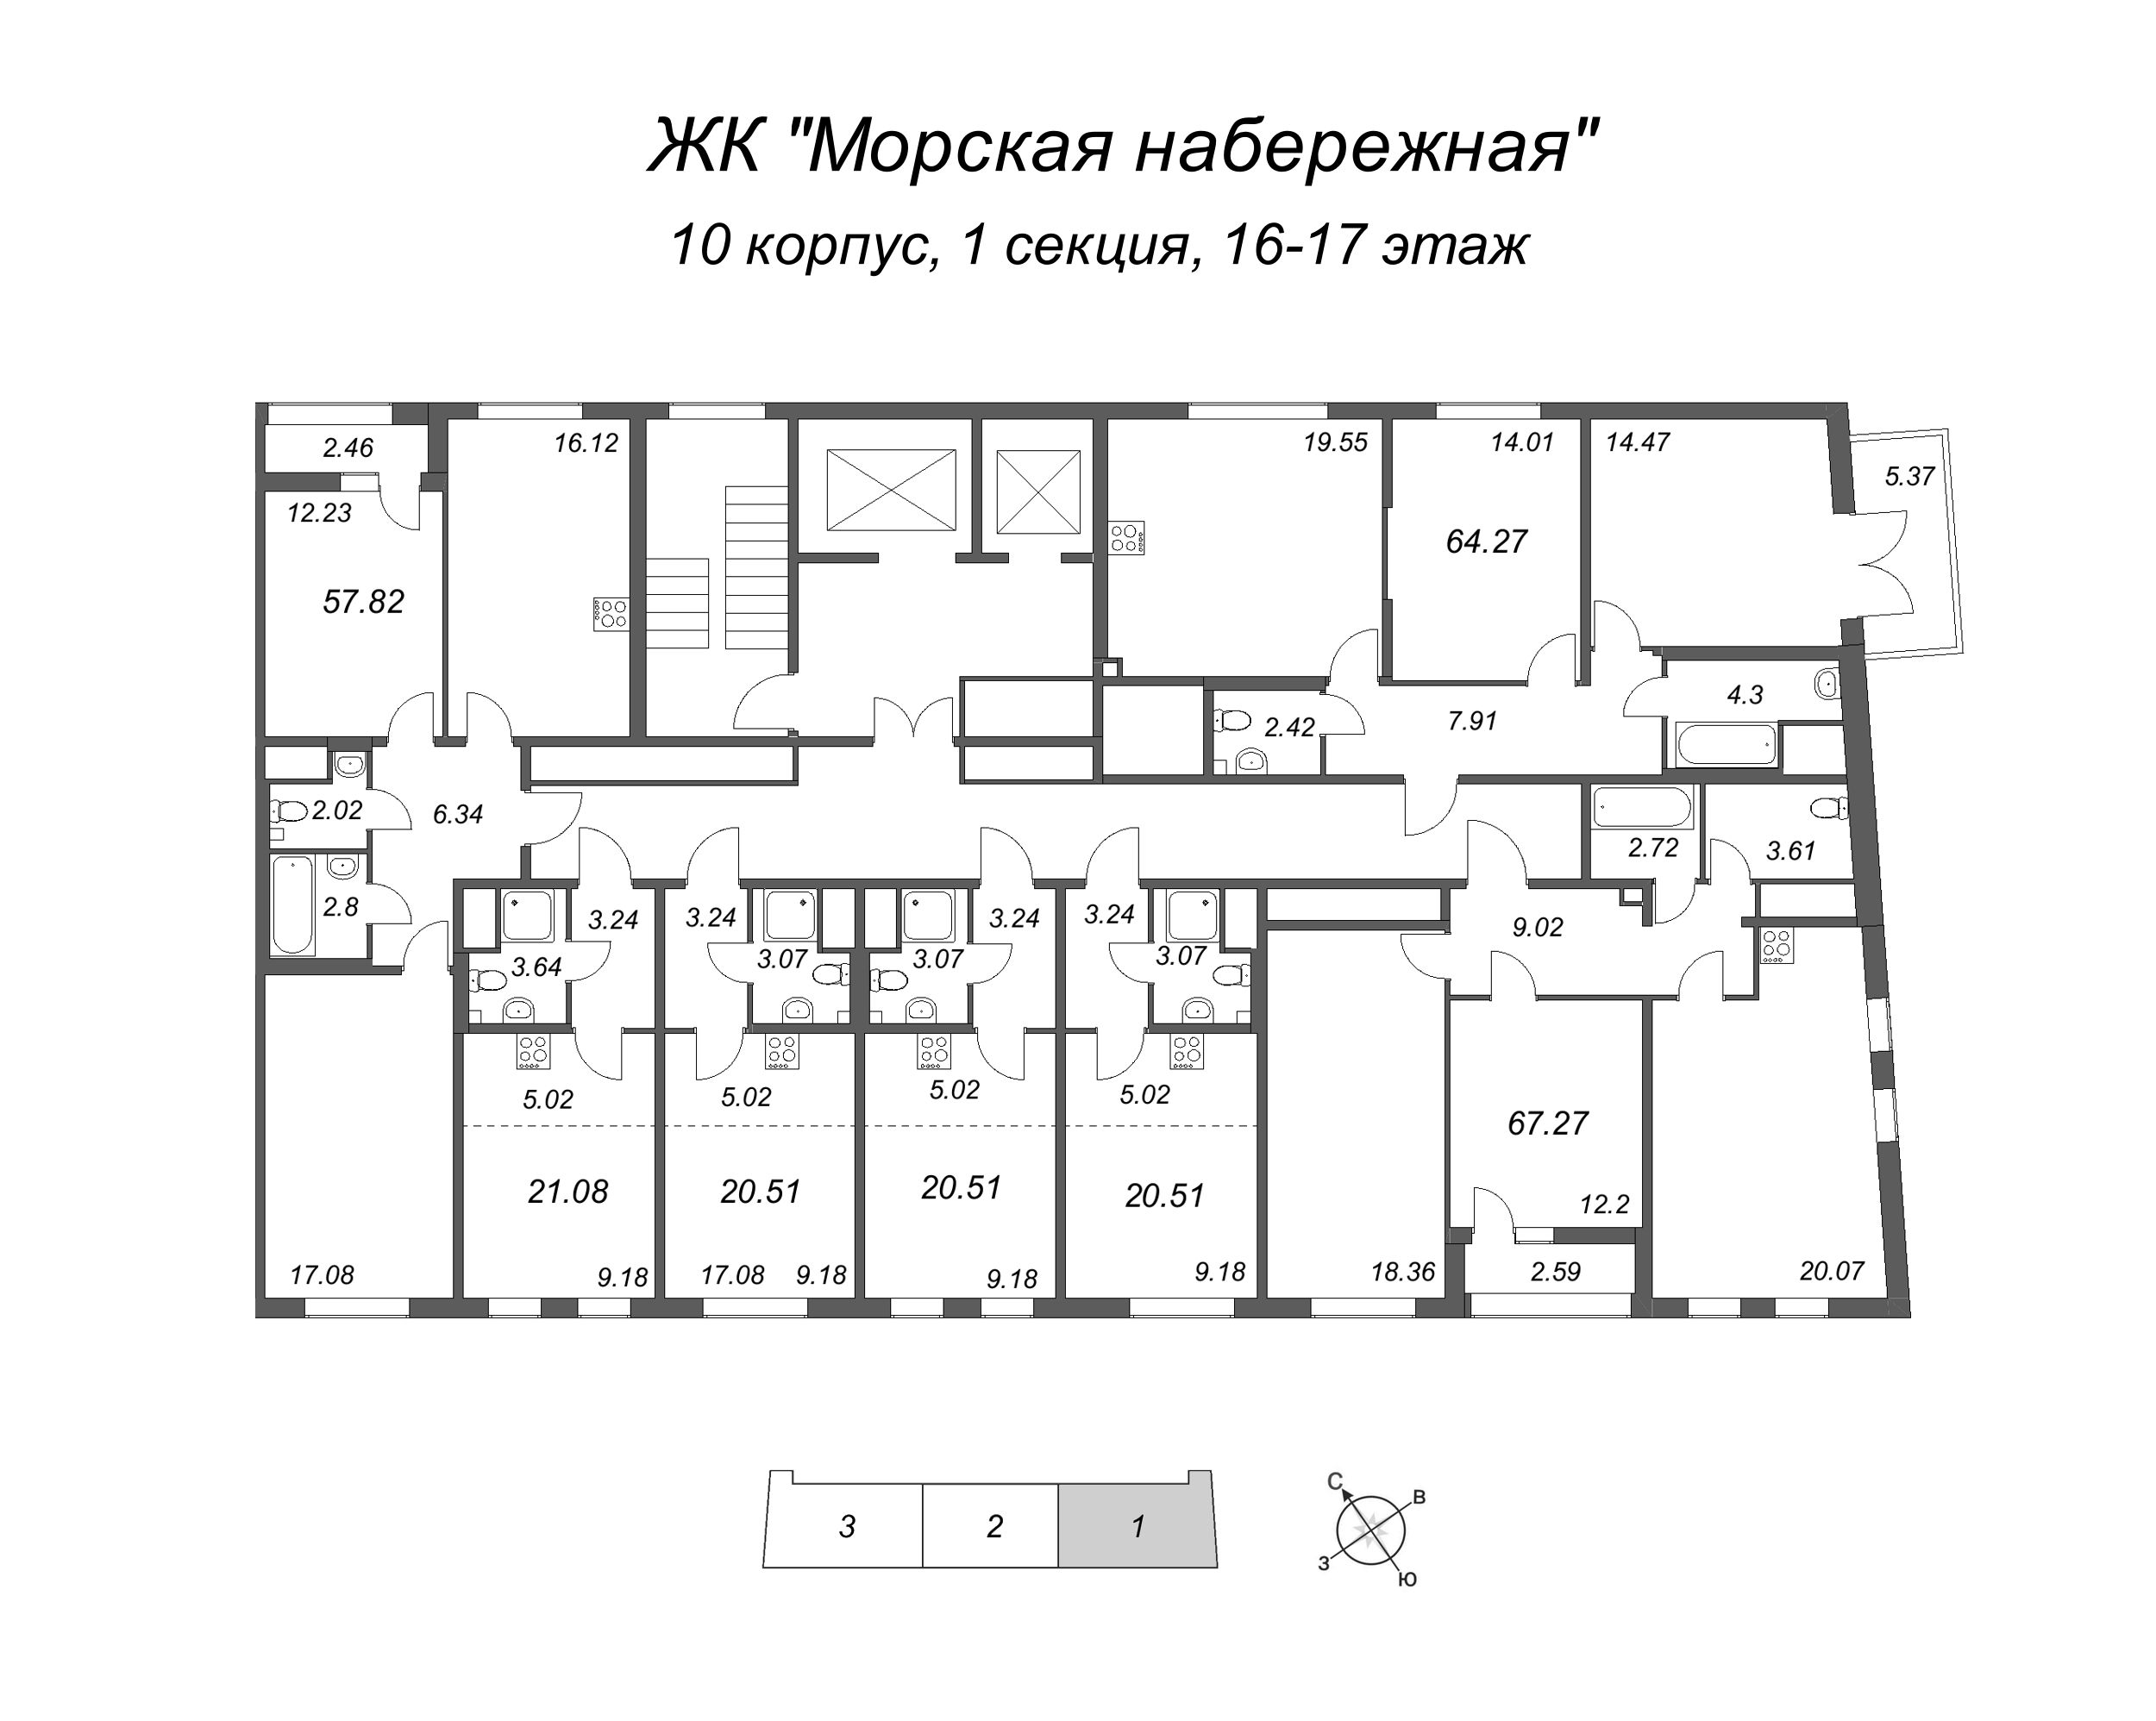 3-комнатная (Евро) квартира, 67.27 м² - планировка этажа